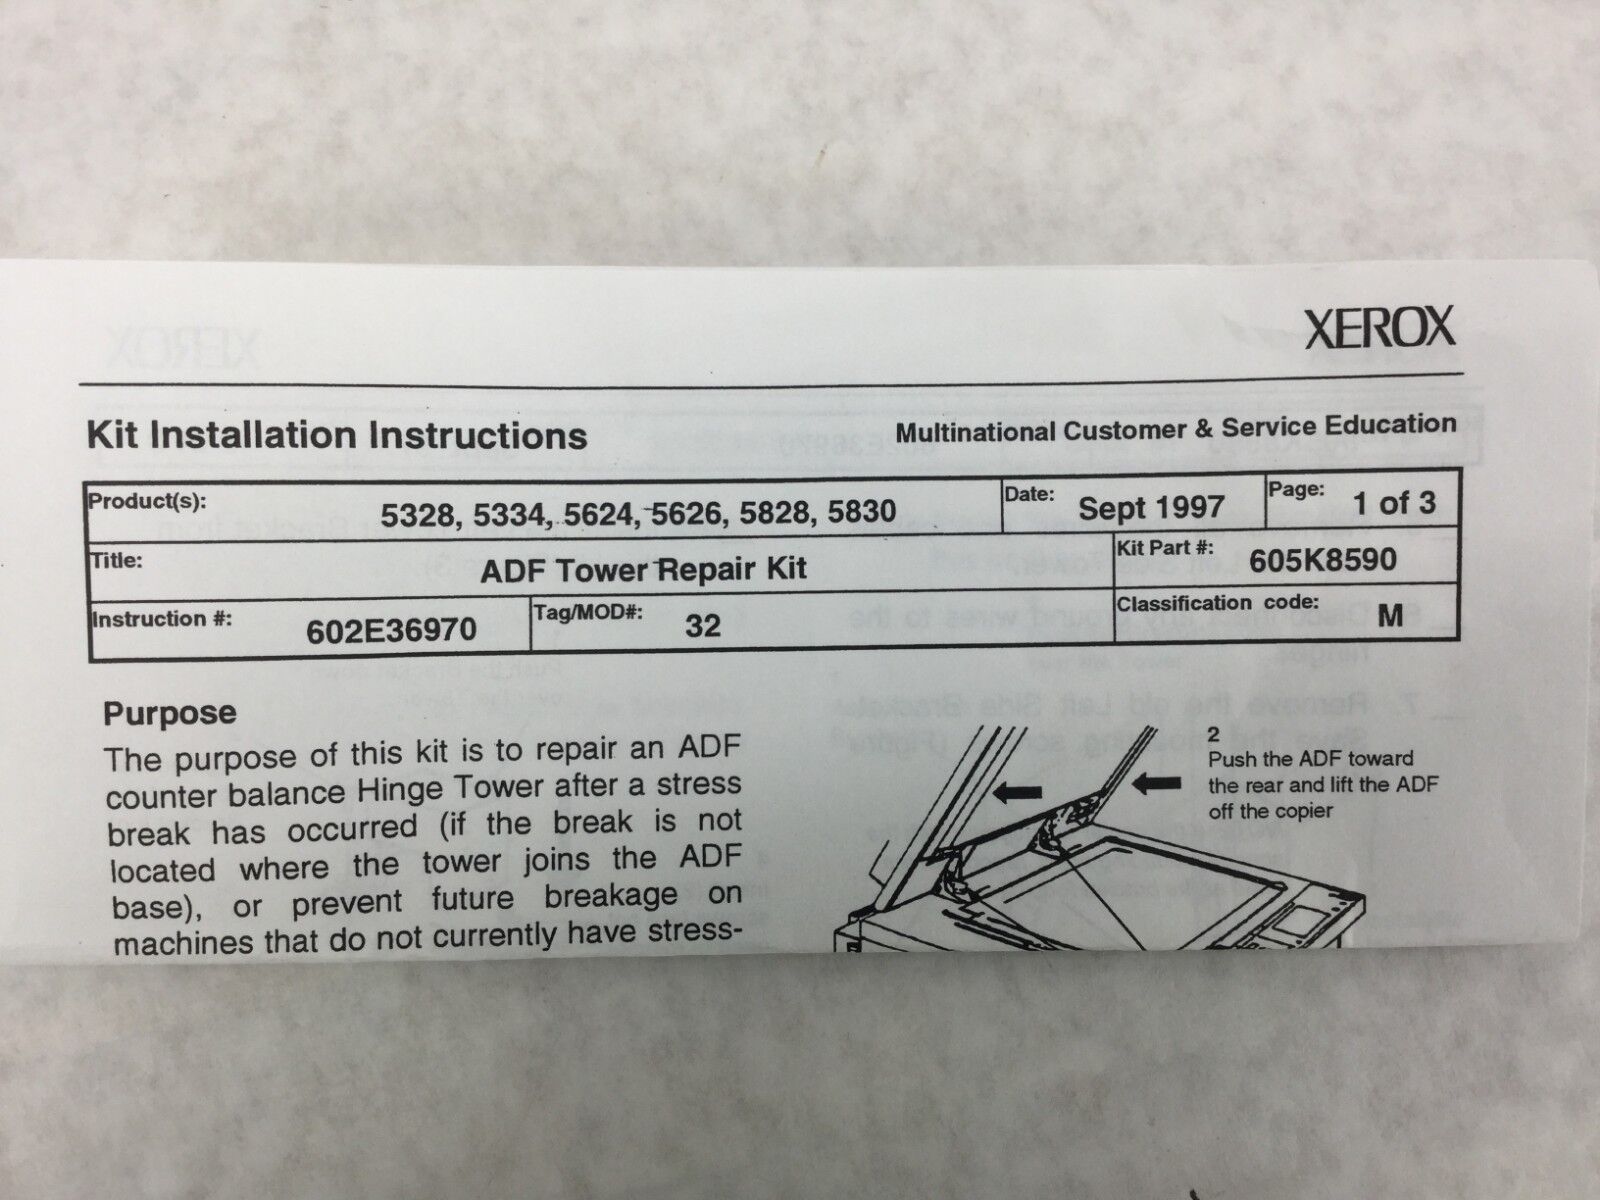 Xerox 605K08590 ADH Tower Repair